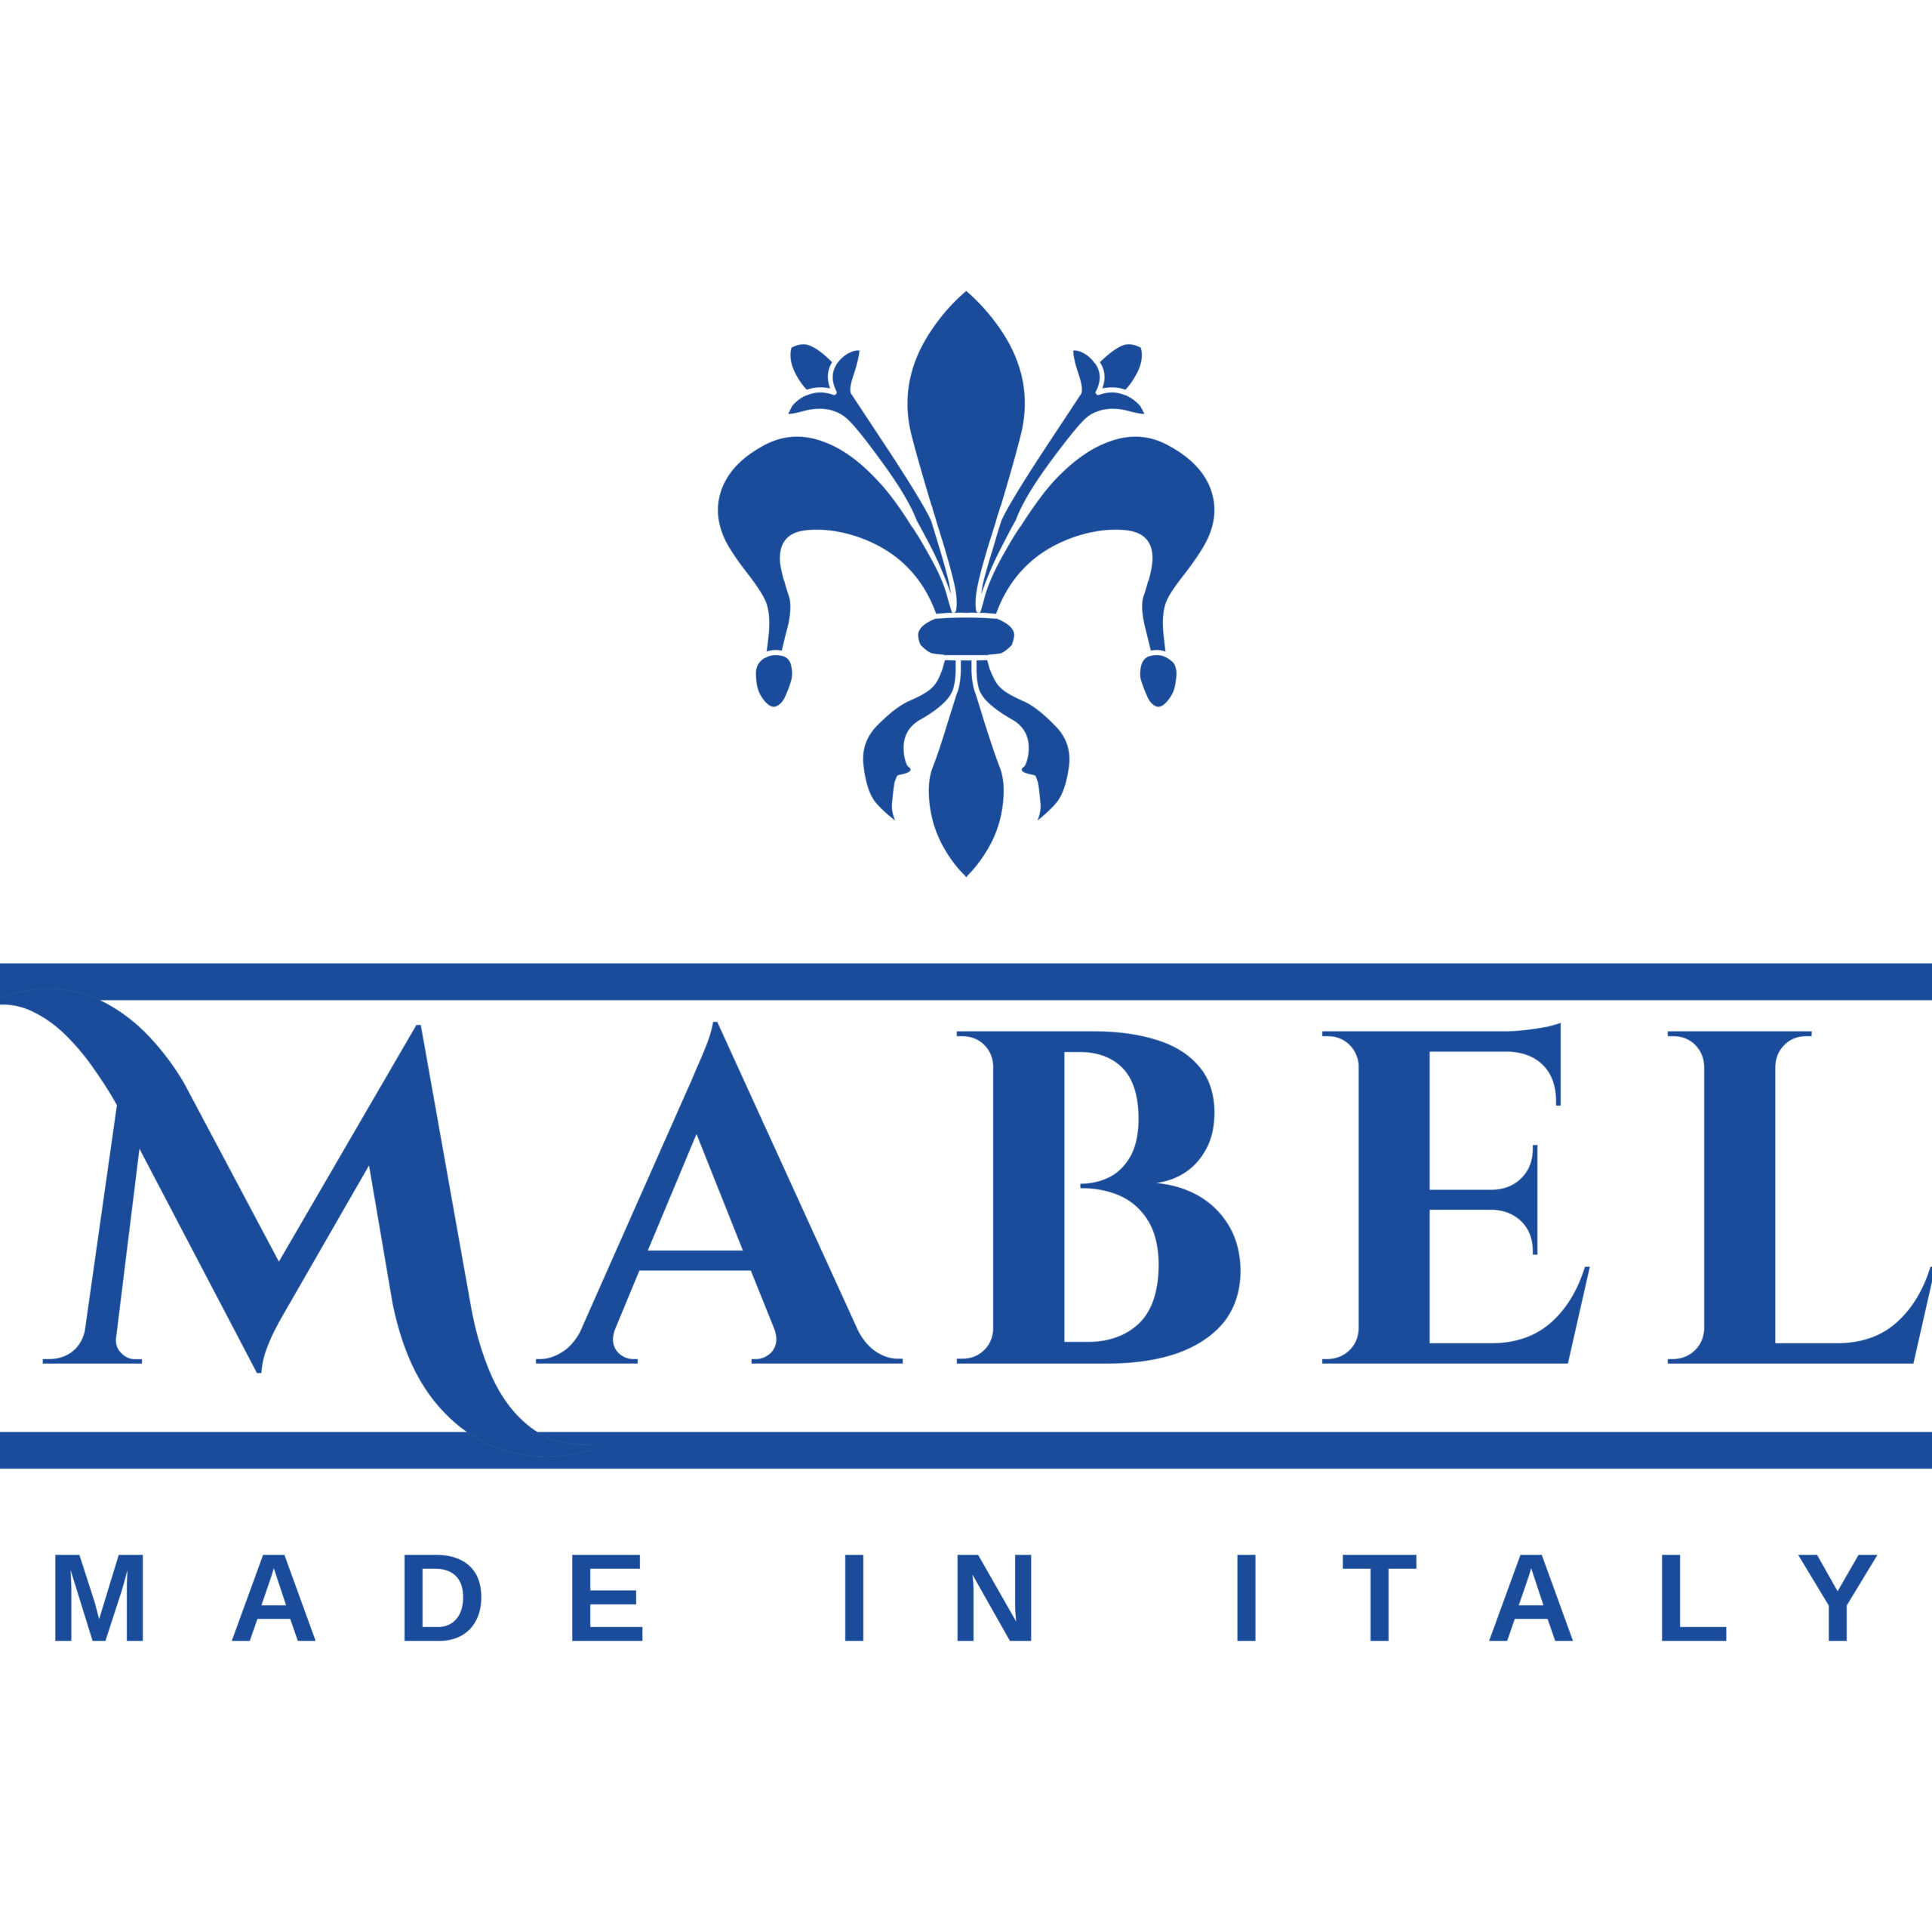 (c) Mabelindustries.com